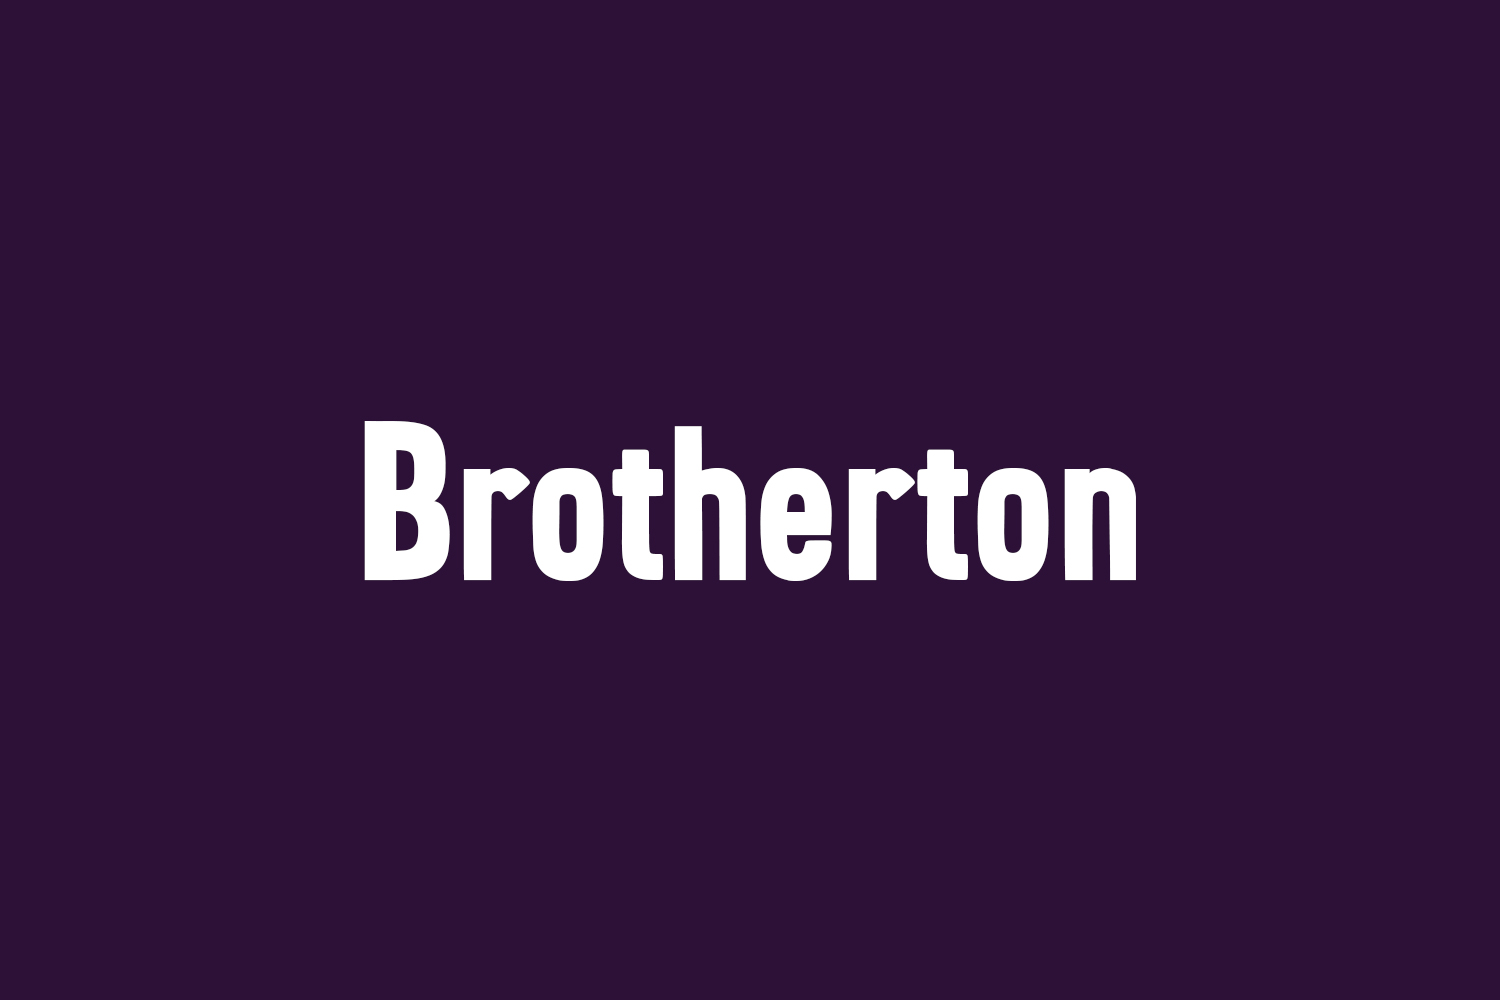 Brotherton Free Font